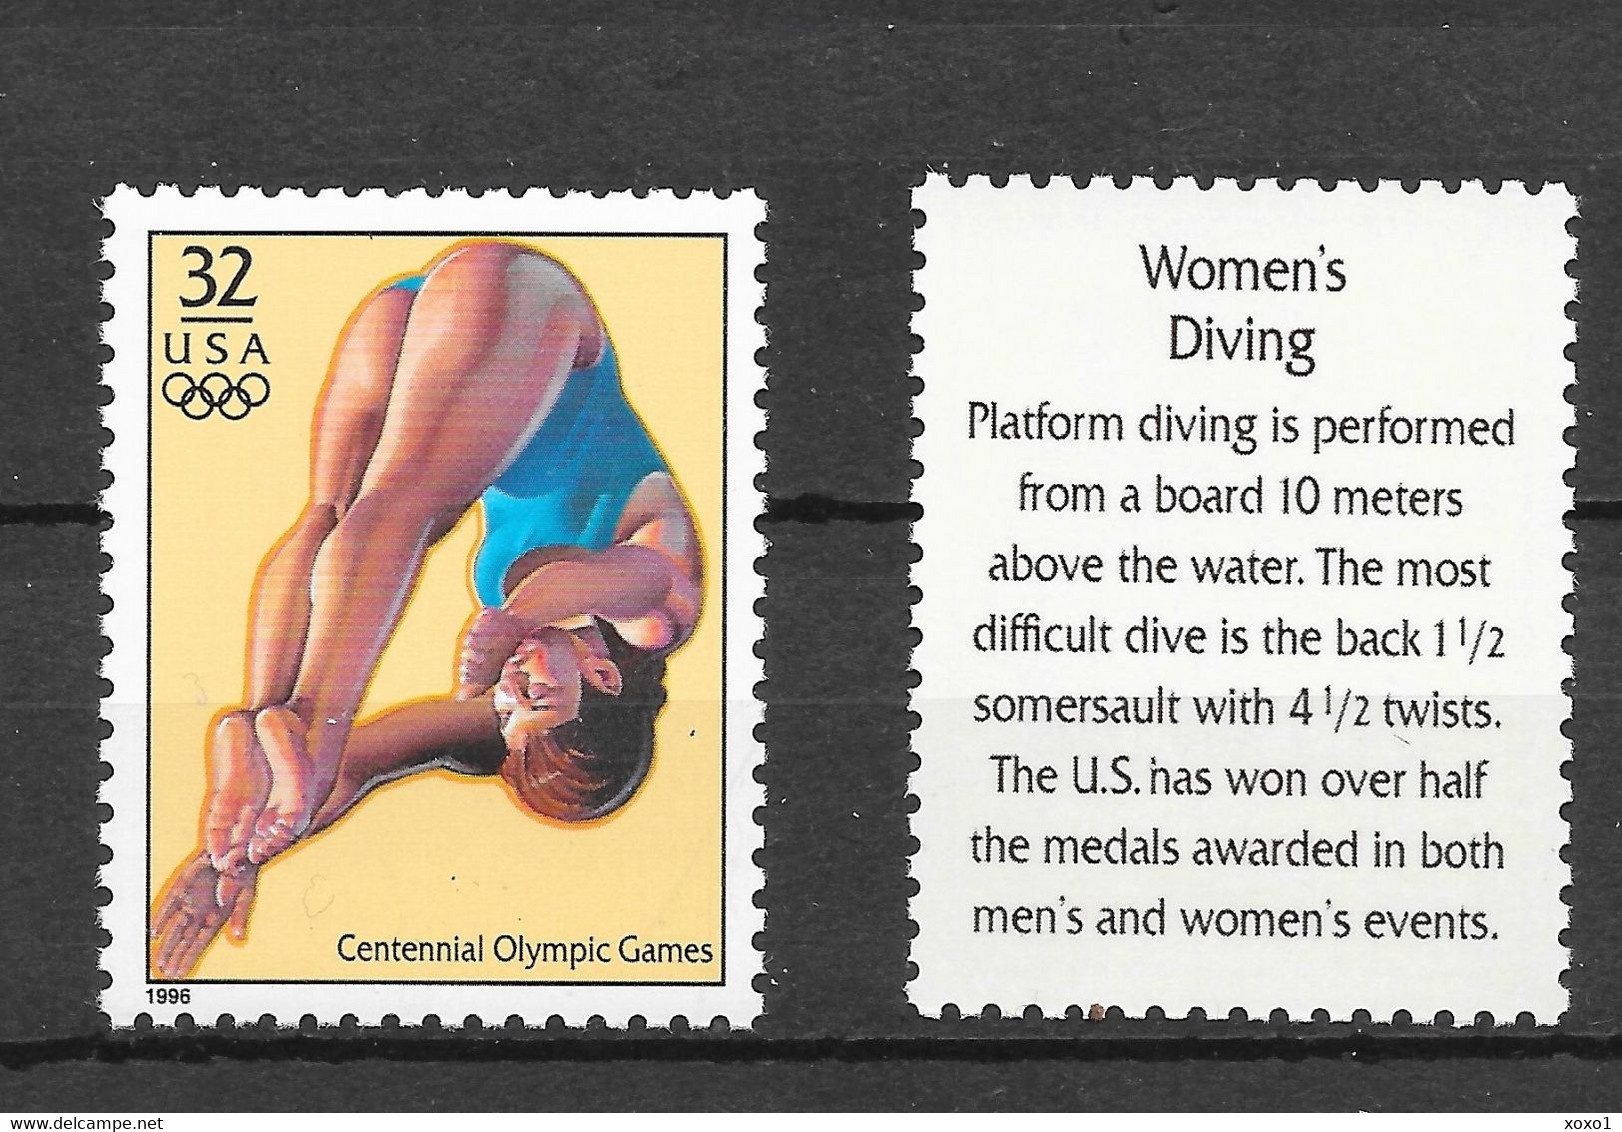 USA 1996 MiNr. 2708 Olympic Games Sports Diving 1v MNH ** 0,90 € - Tauchen